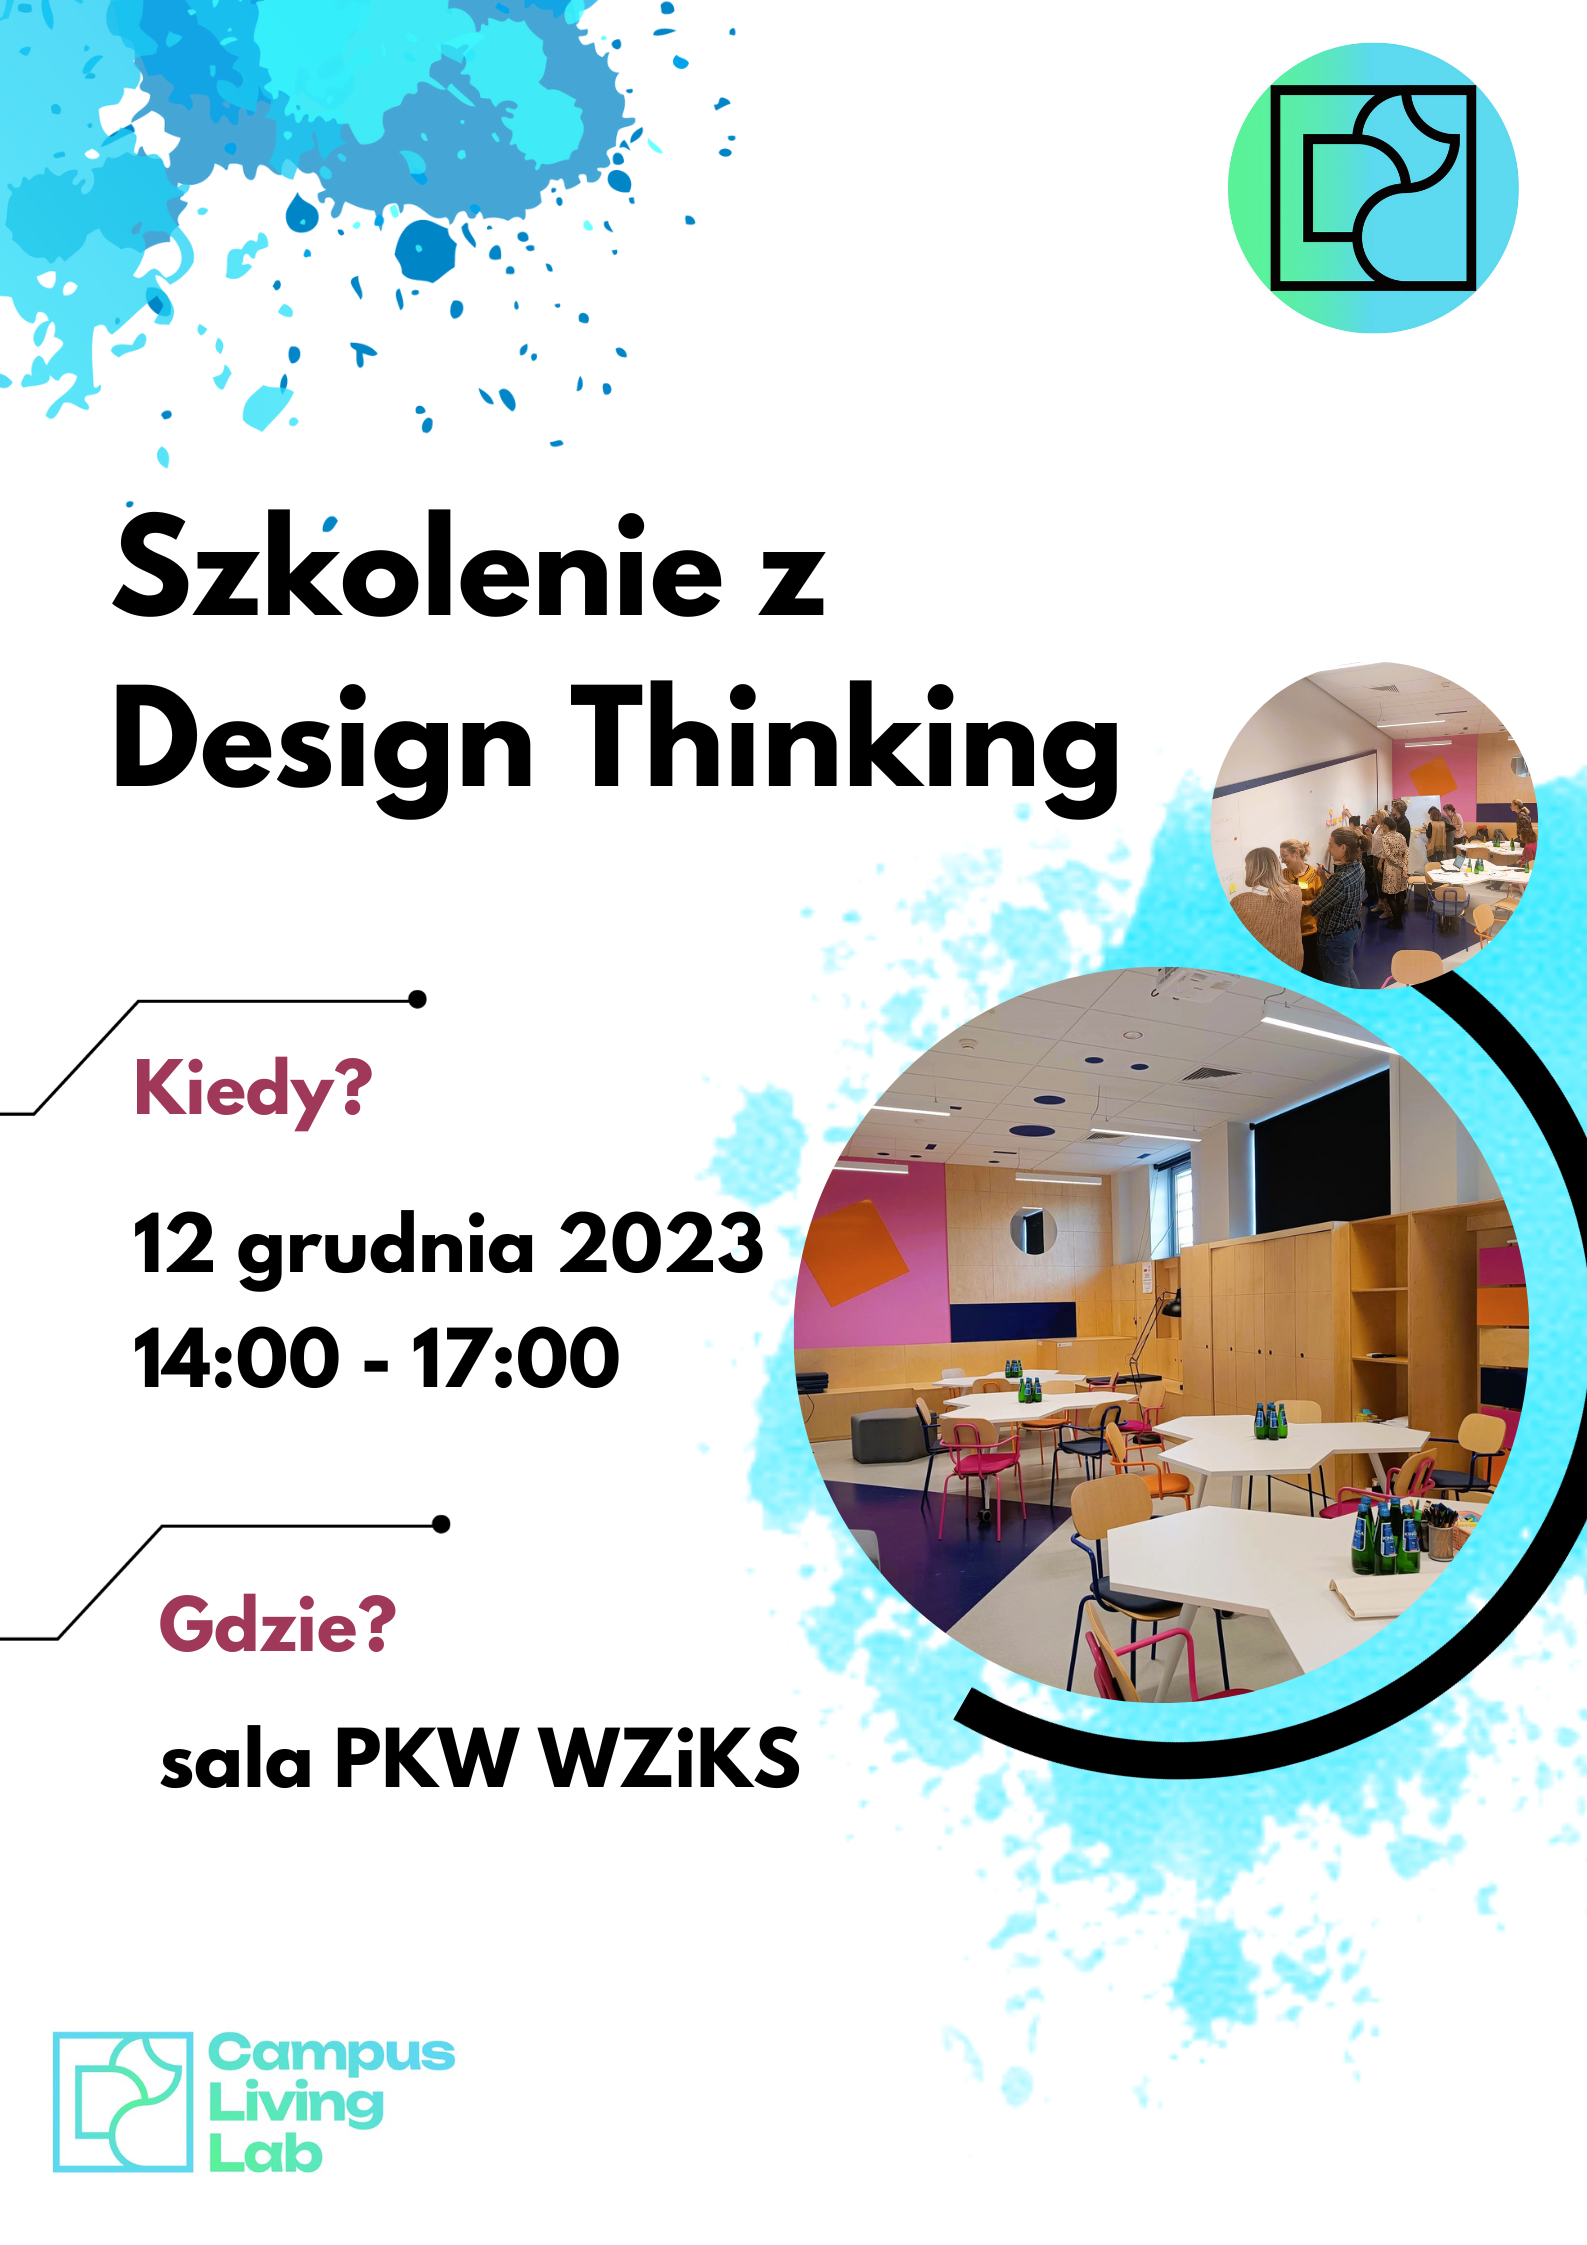 Design Thinking training - 2nd edition!